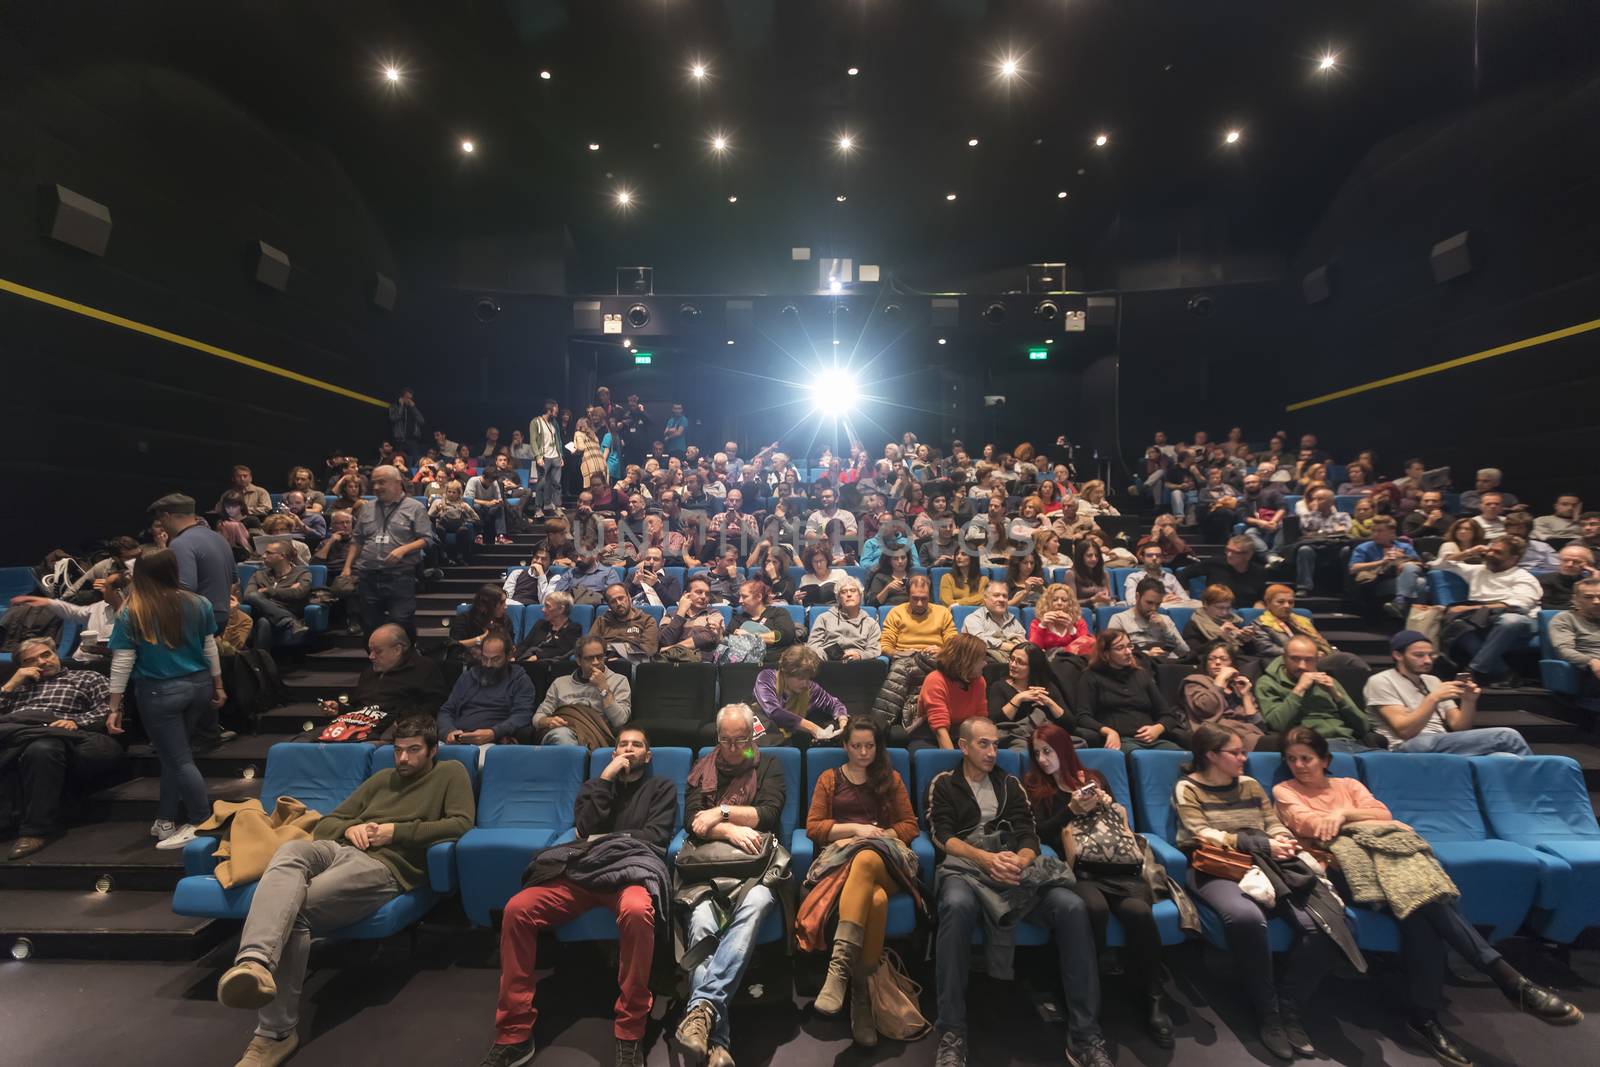 Spectators watching in the cinema by ververidis